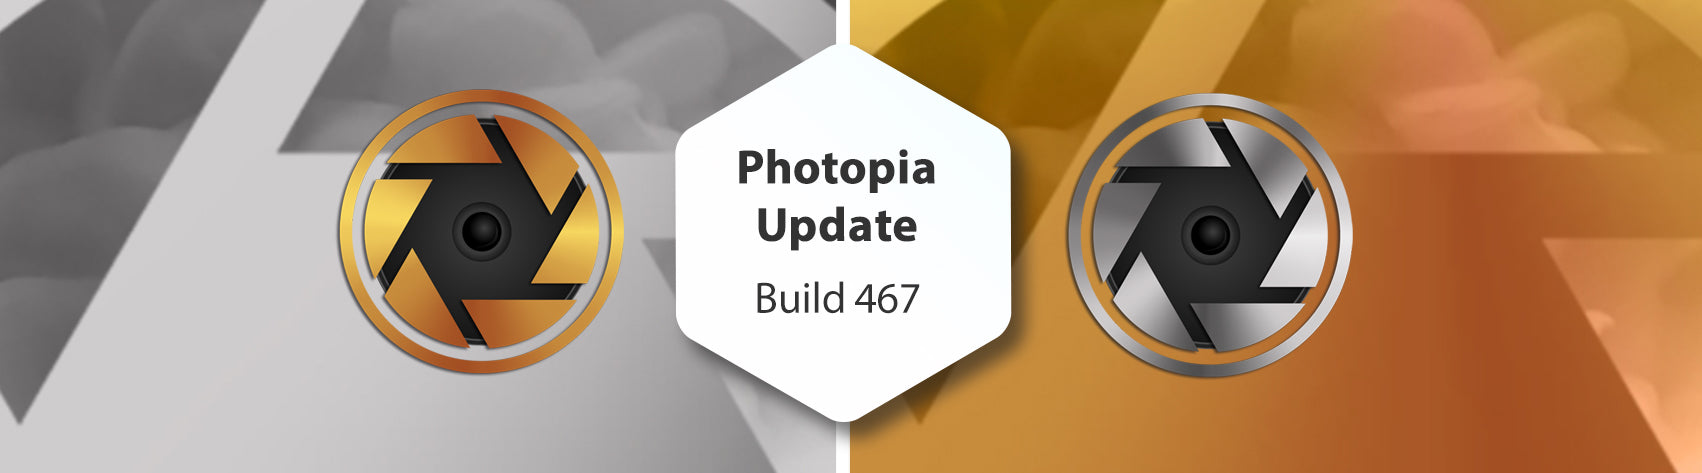 Photopia Update - Build 467